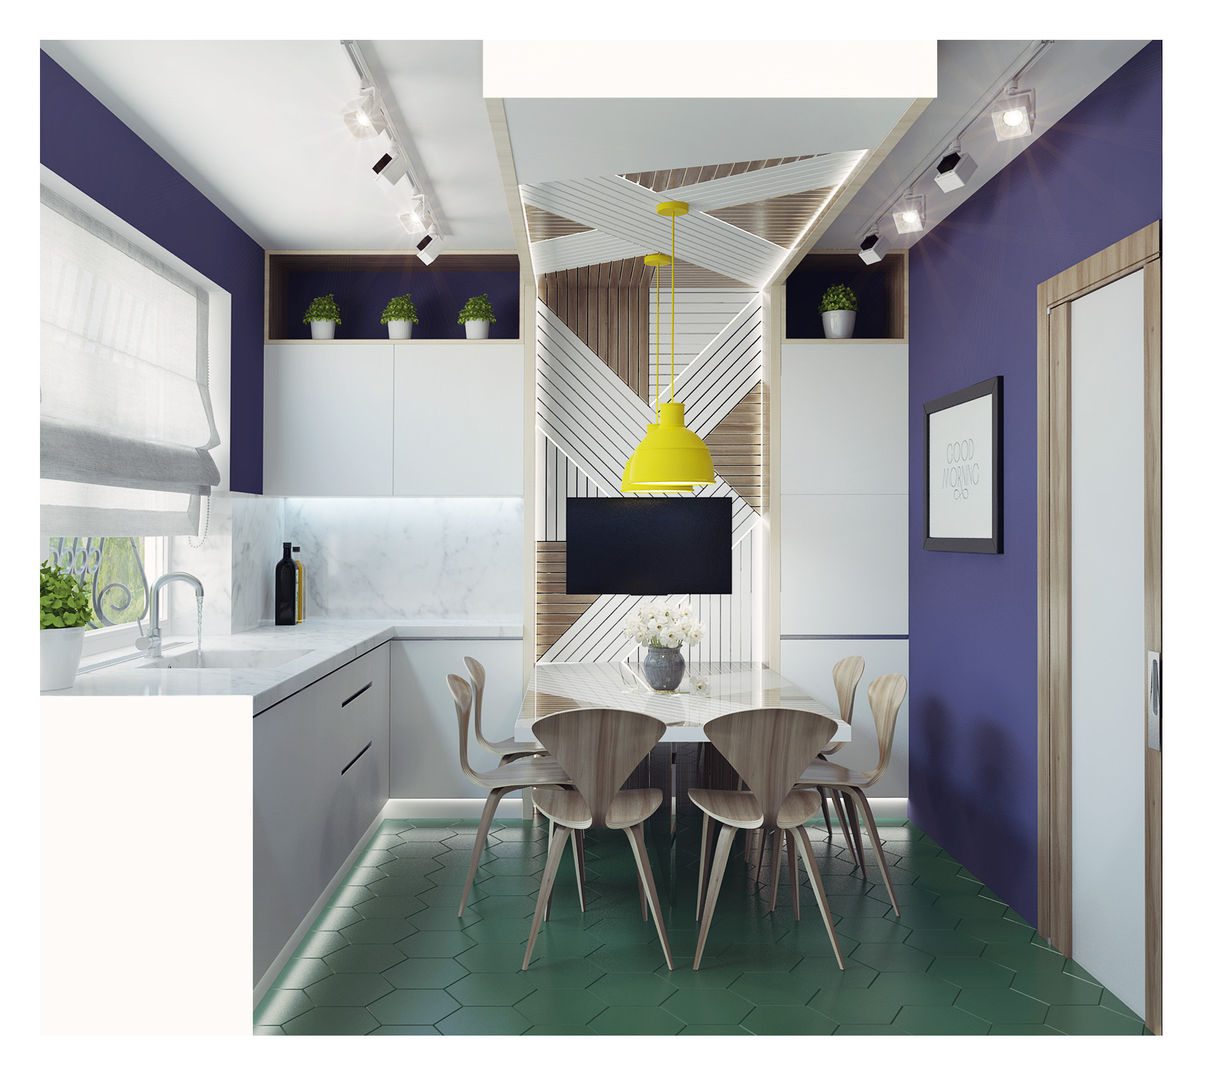 Small kitchen interior design, Ksenia Konovalova Design Ksenia Konovalova Design Moderne keukens Hout Hout